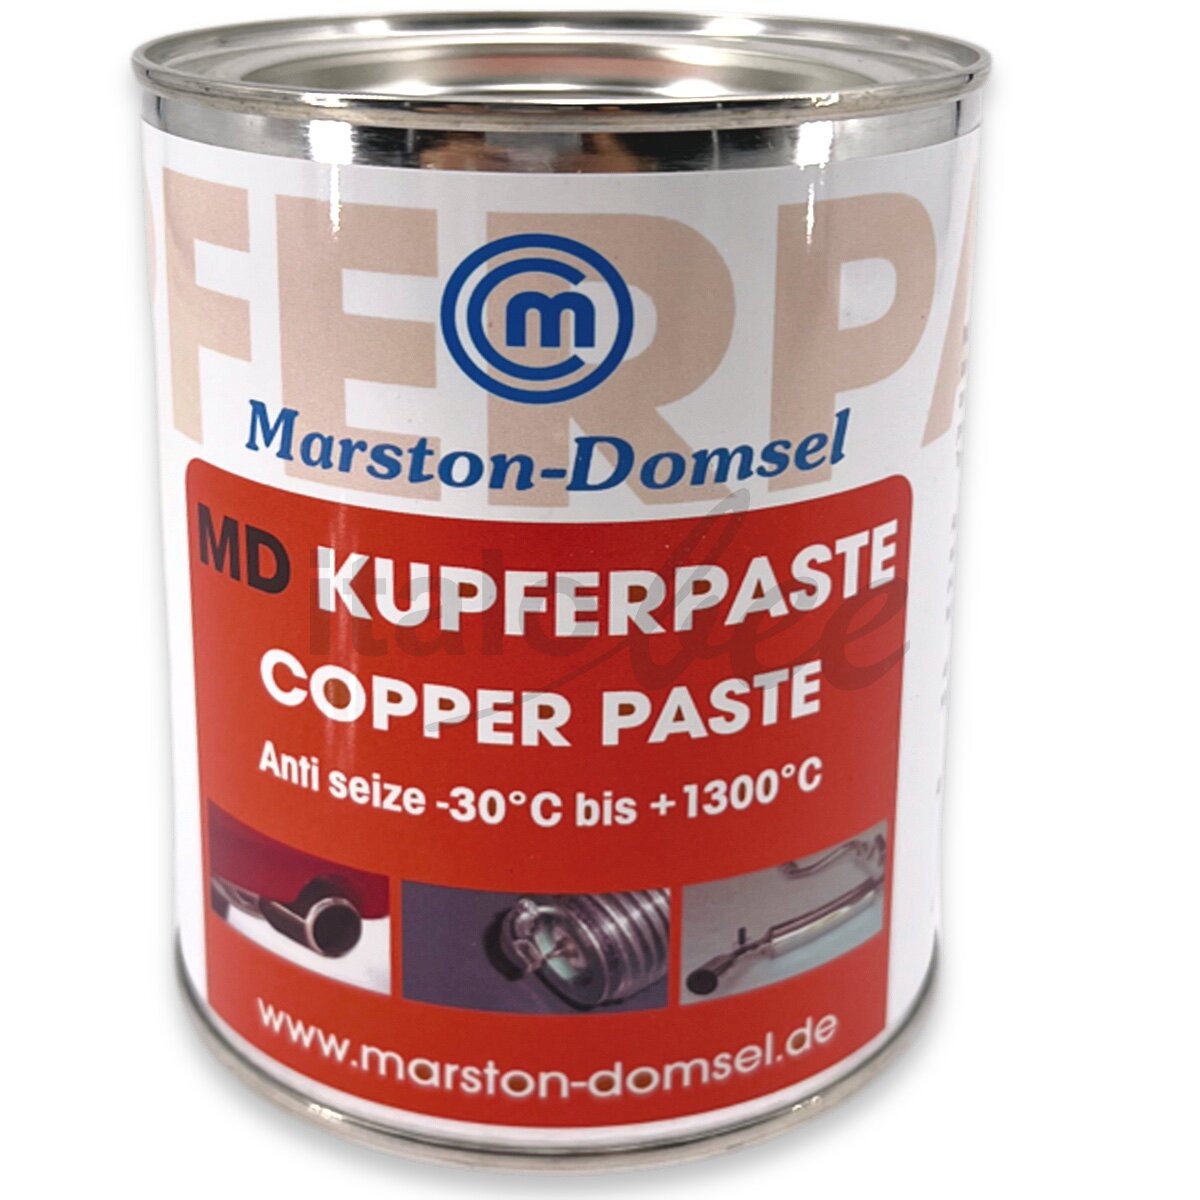 Kupferpaste Marston-Domse, 500ml Dose - italobee Shop, 22,95 €